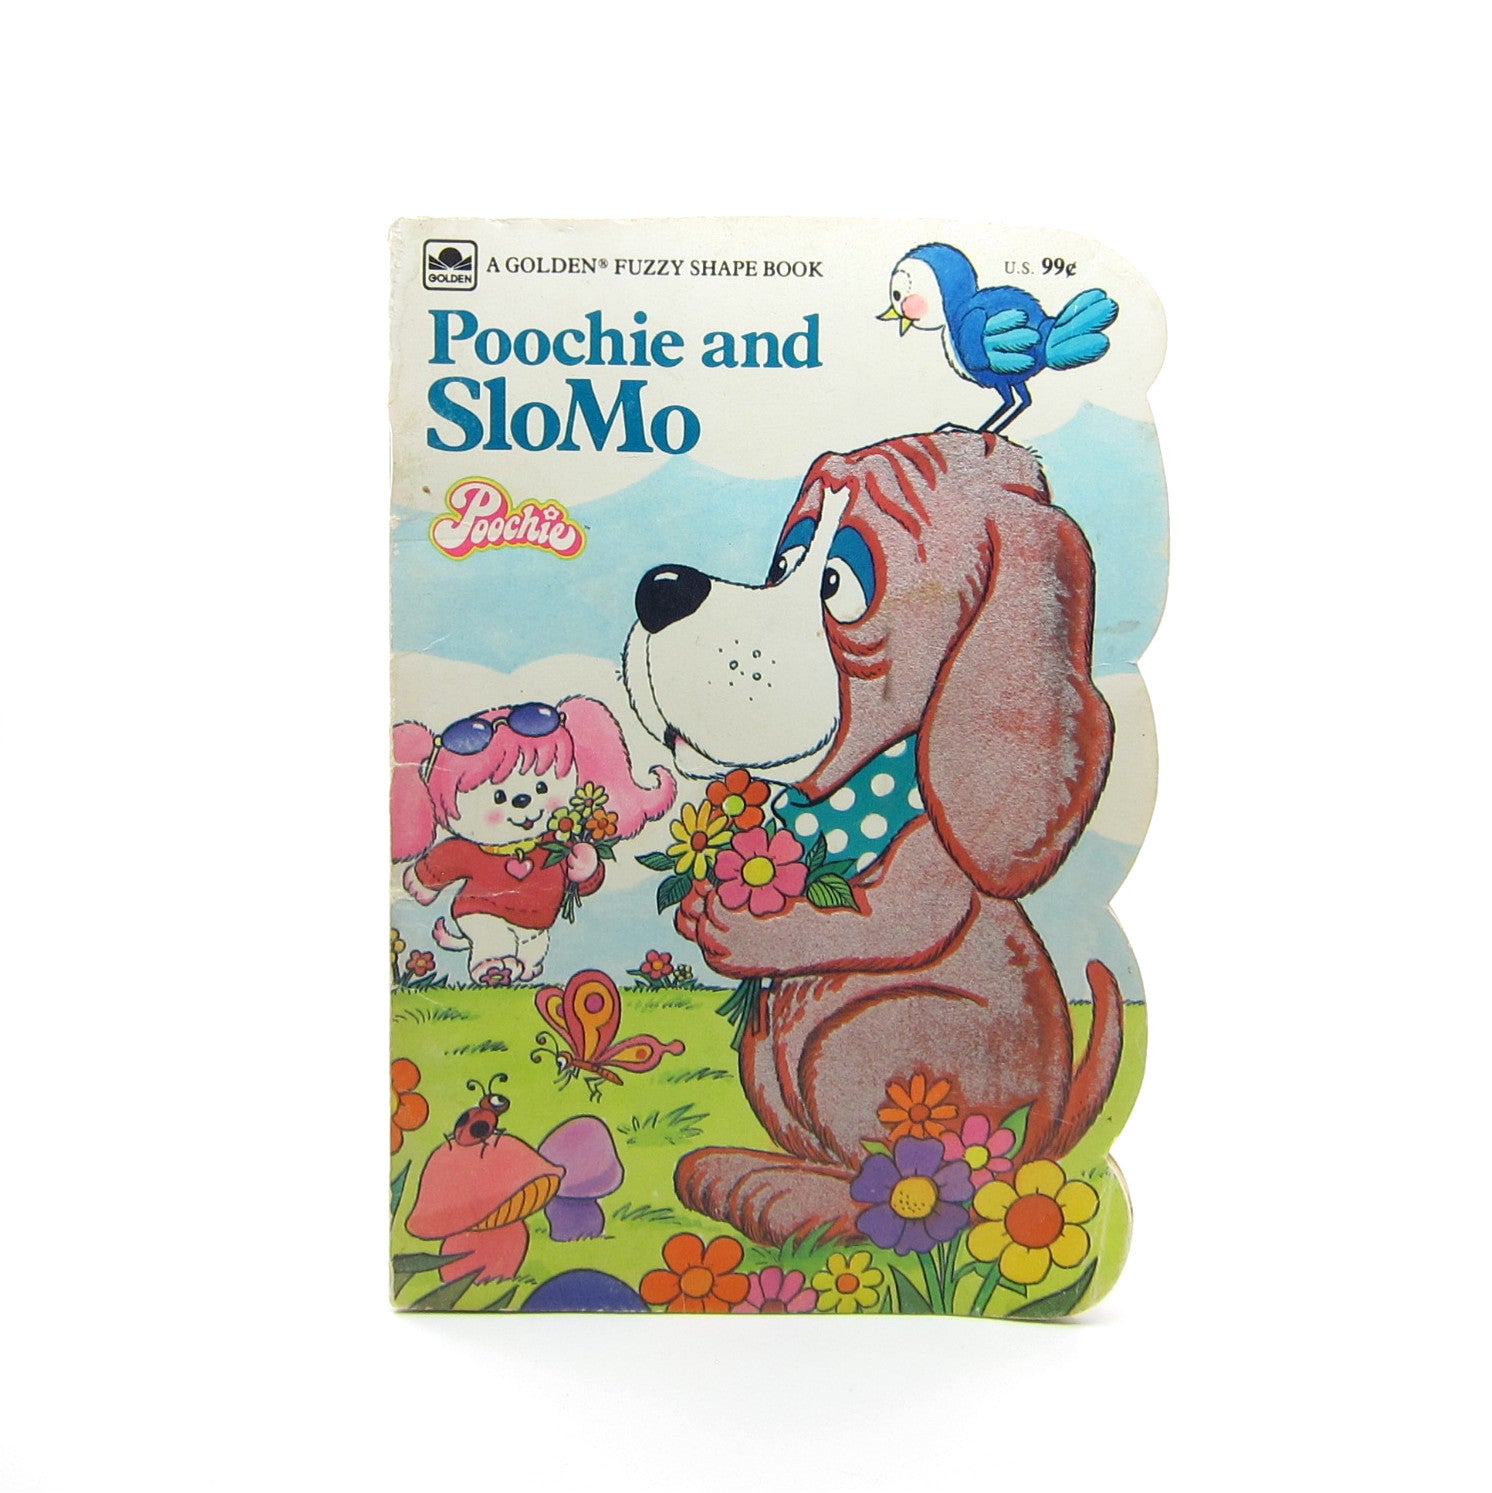 Poochie and SloMo vintage Golden Fuzzy Shape book